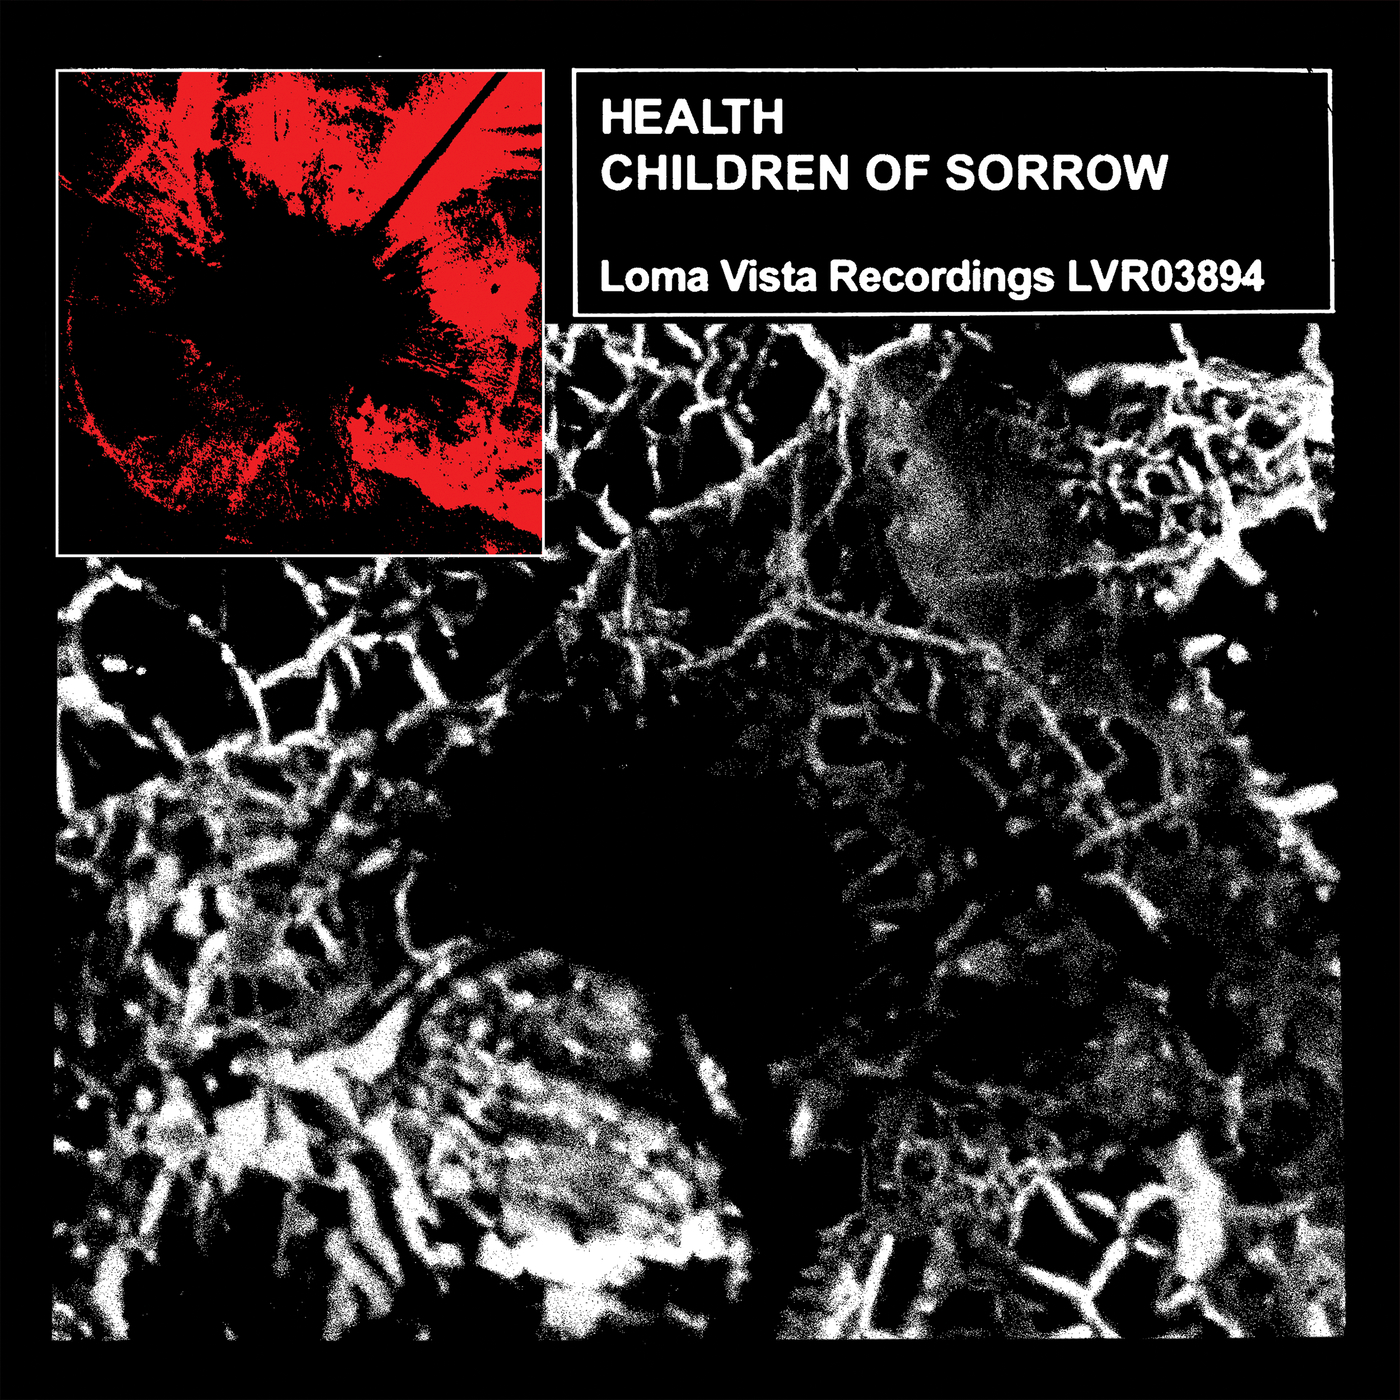 HEALTH — CHILDREN OF SORROW cover artwork